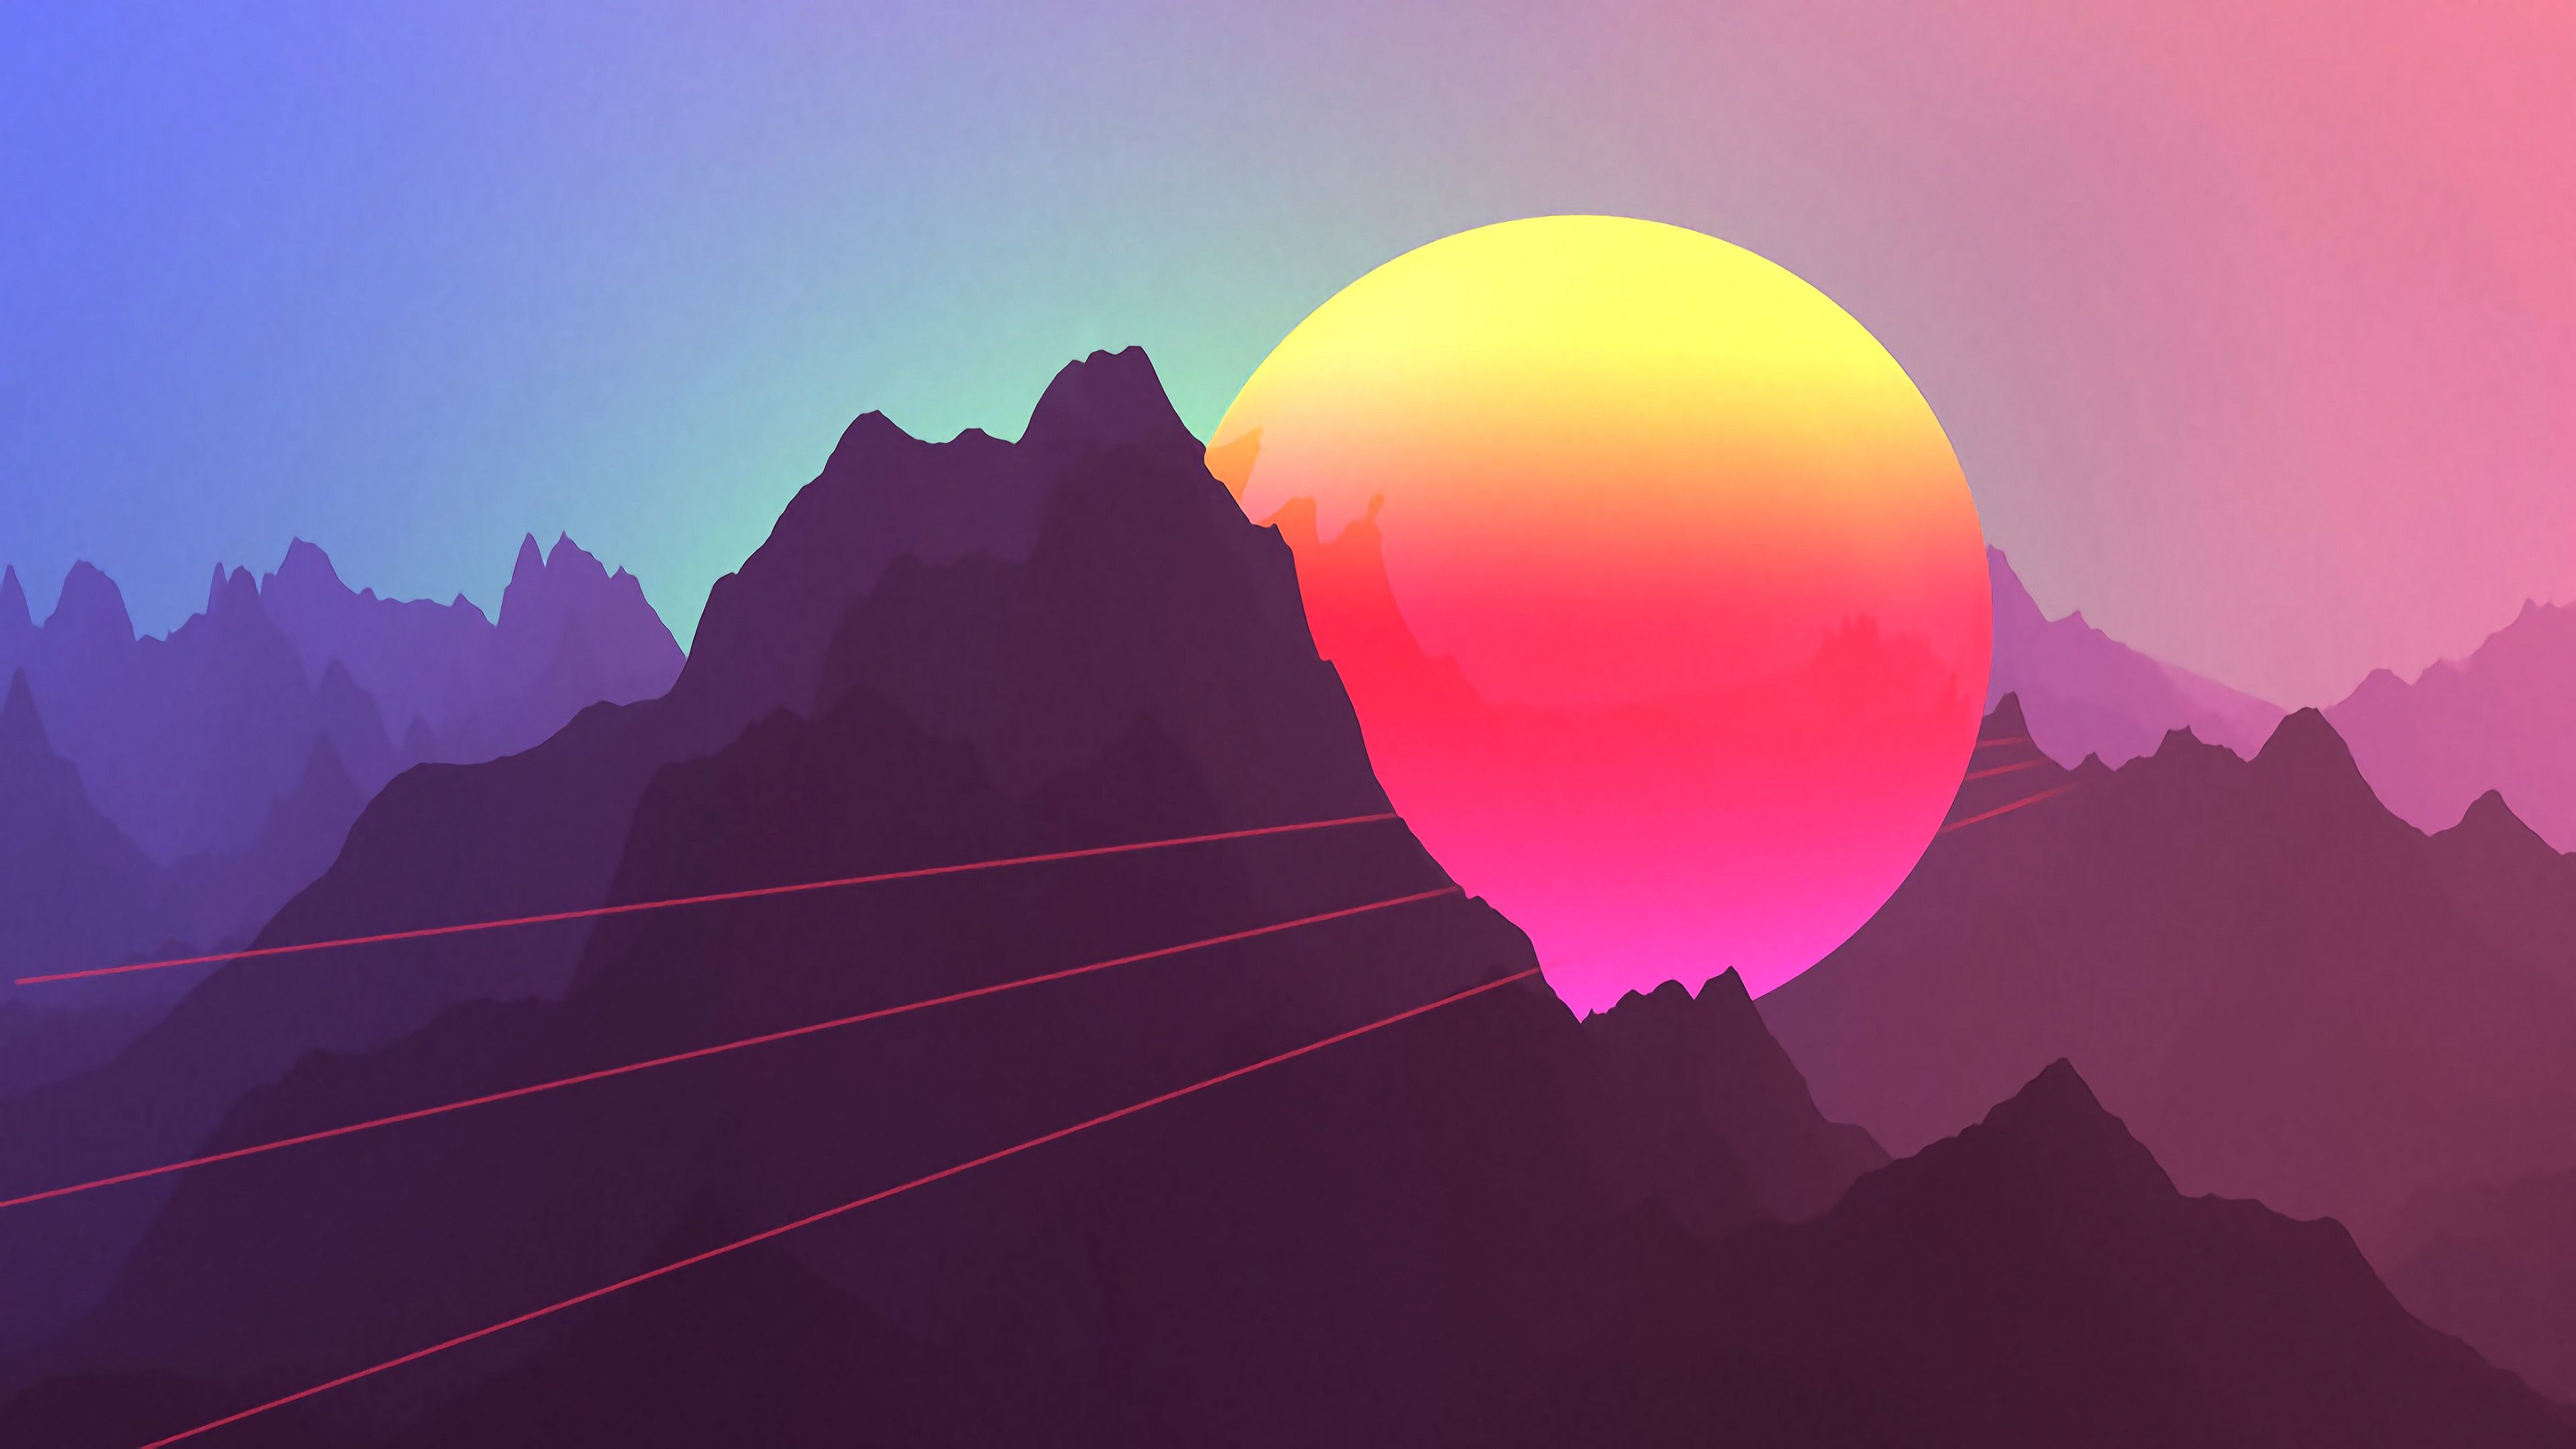 #mountains, #neon, #Retro style, #sunset, wallpaper